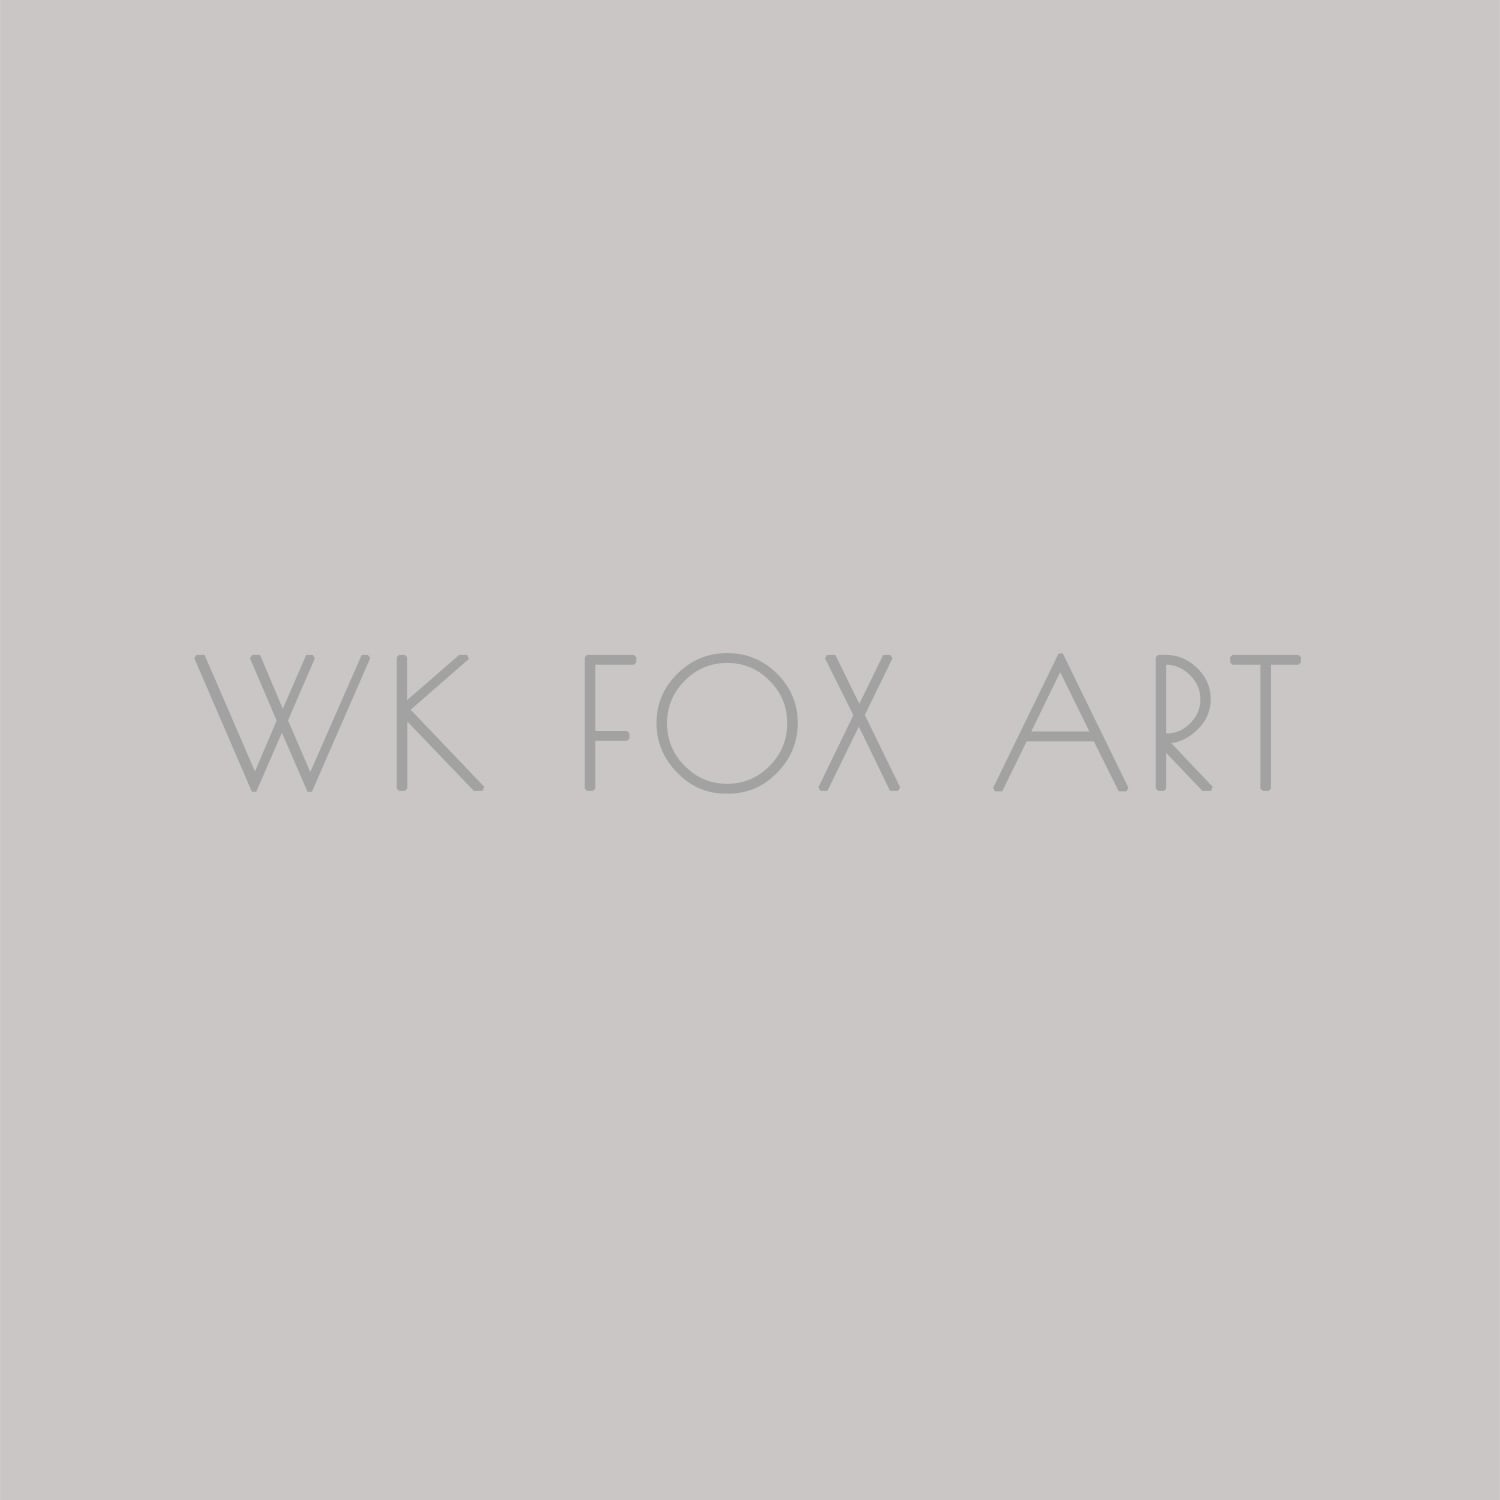 WK Fox Art